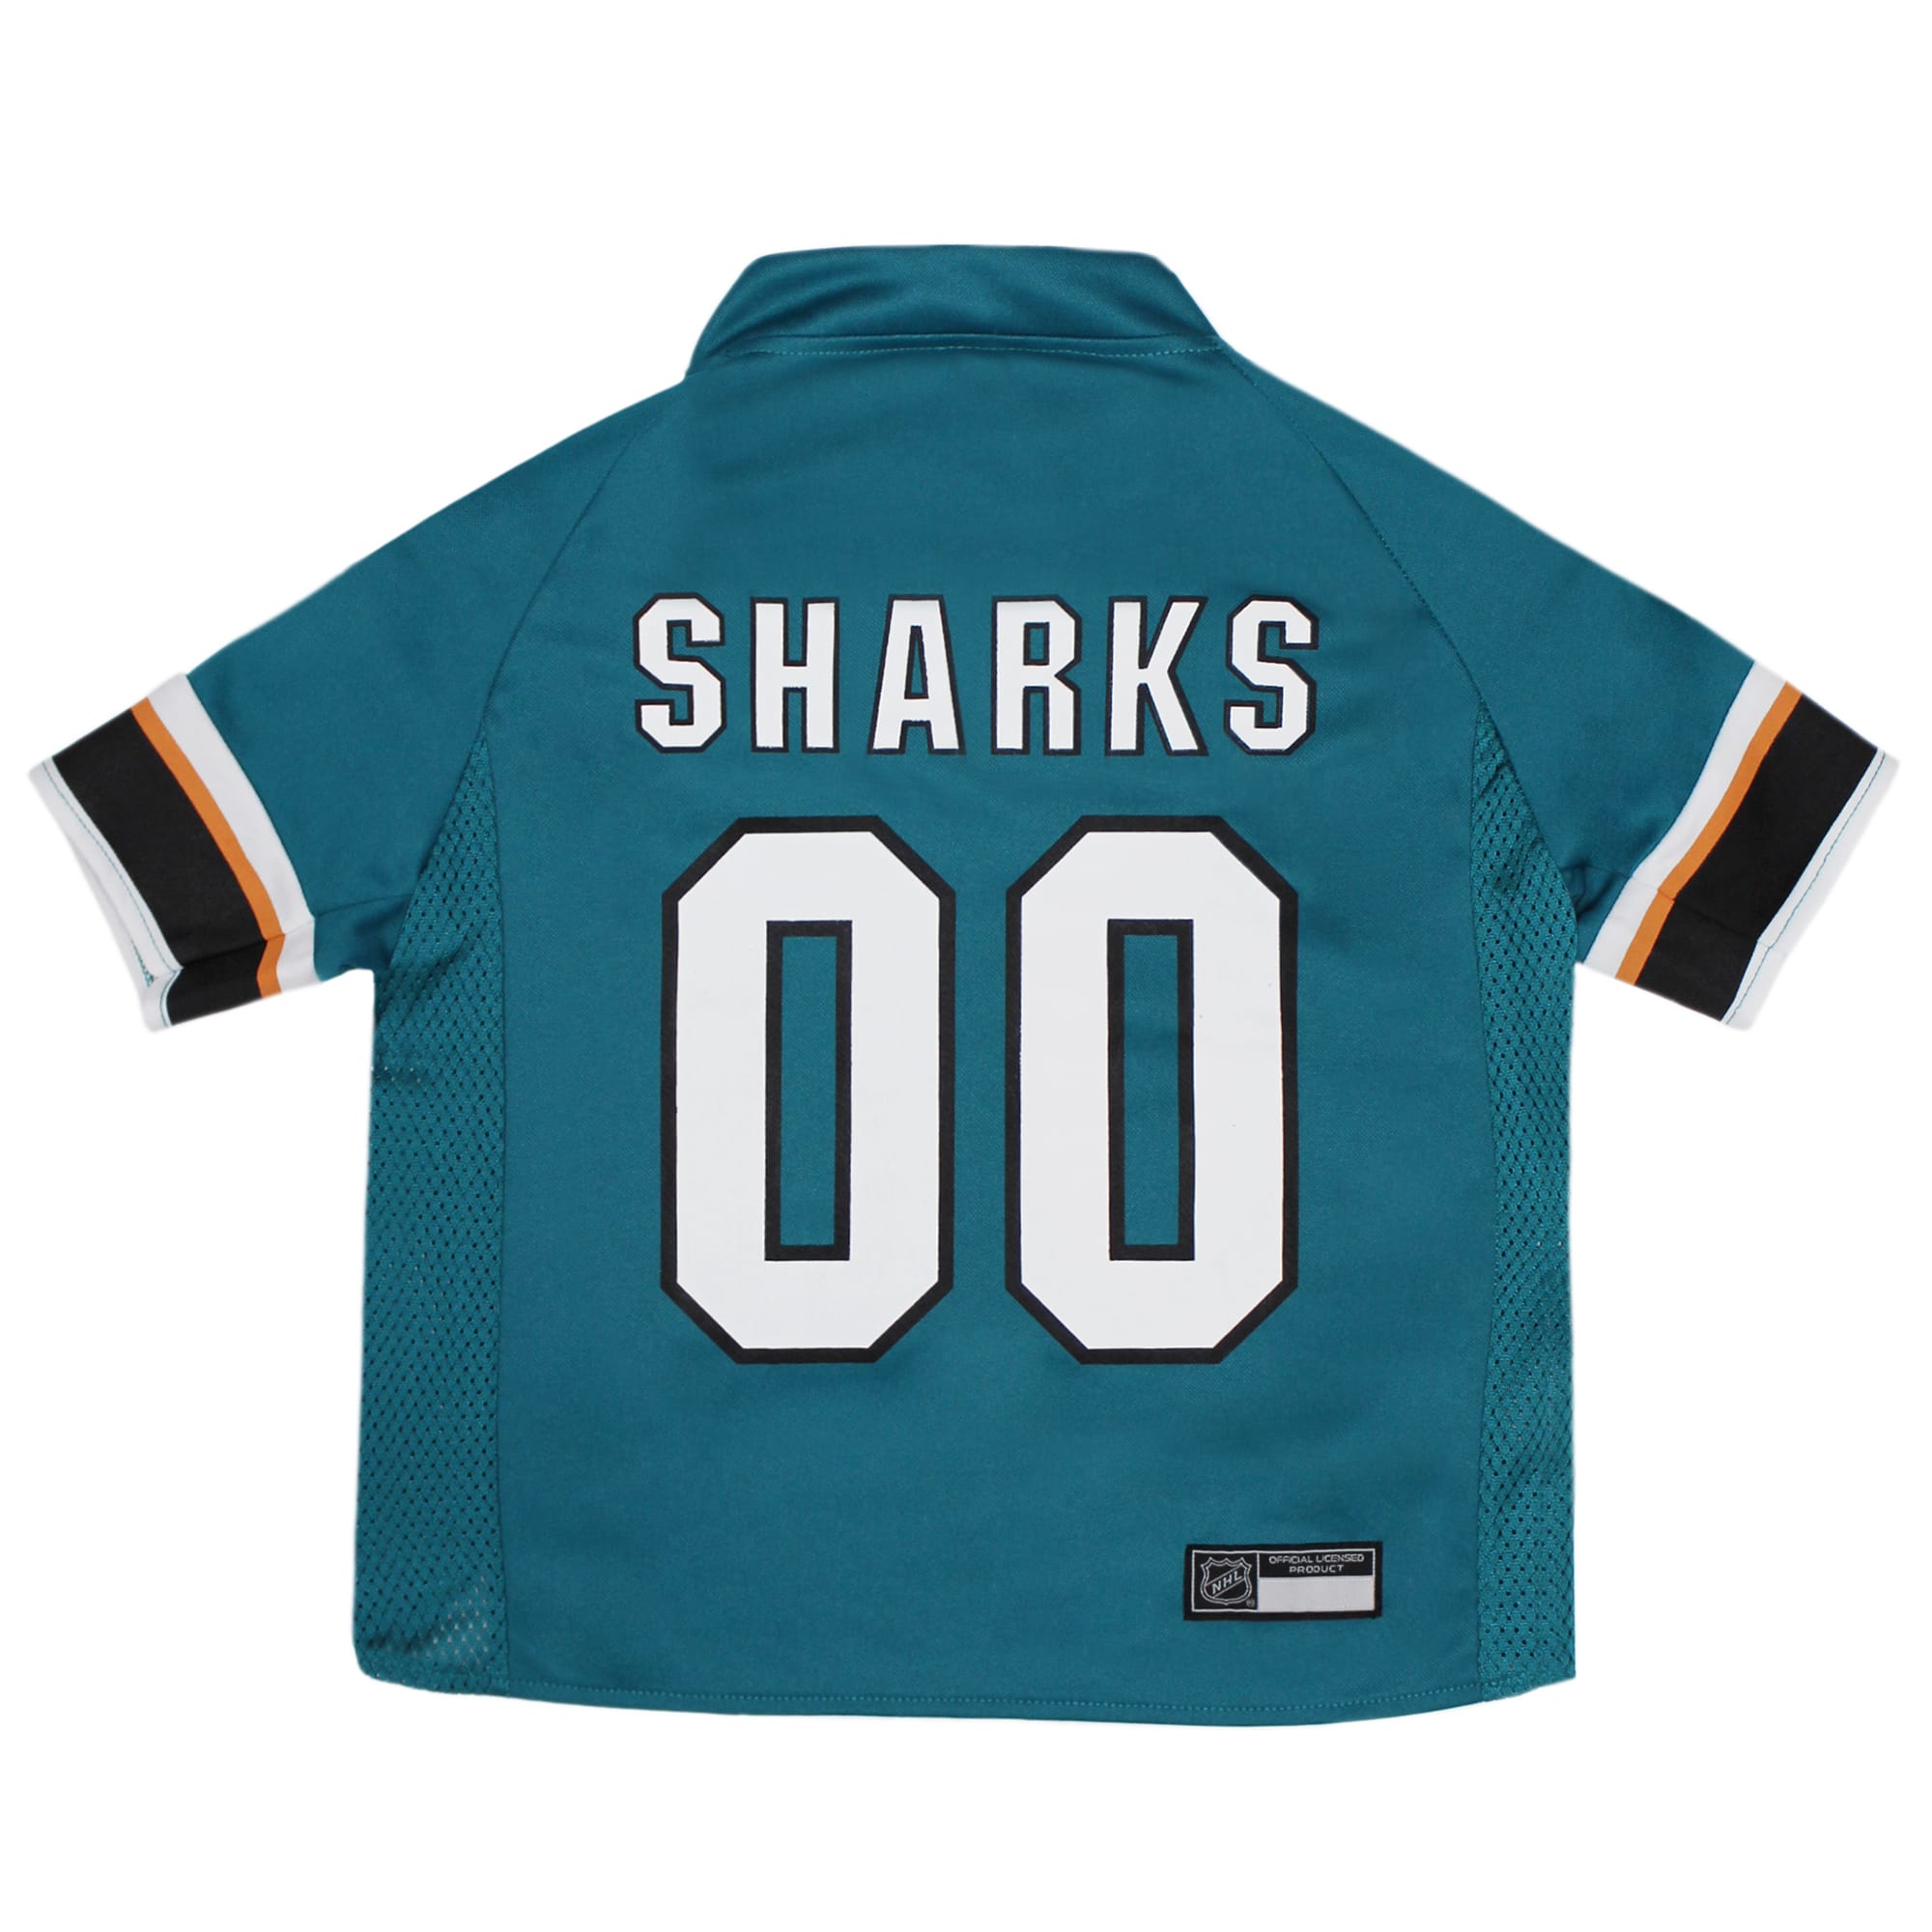 buy sharks jersey